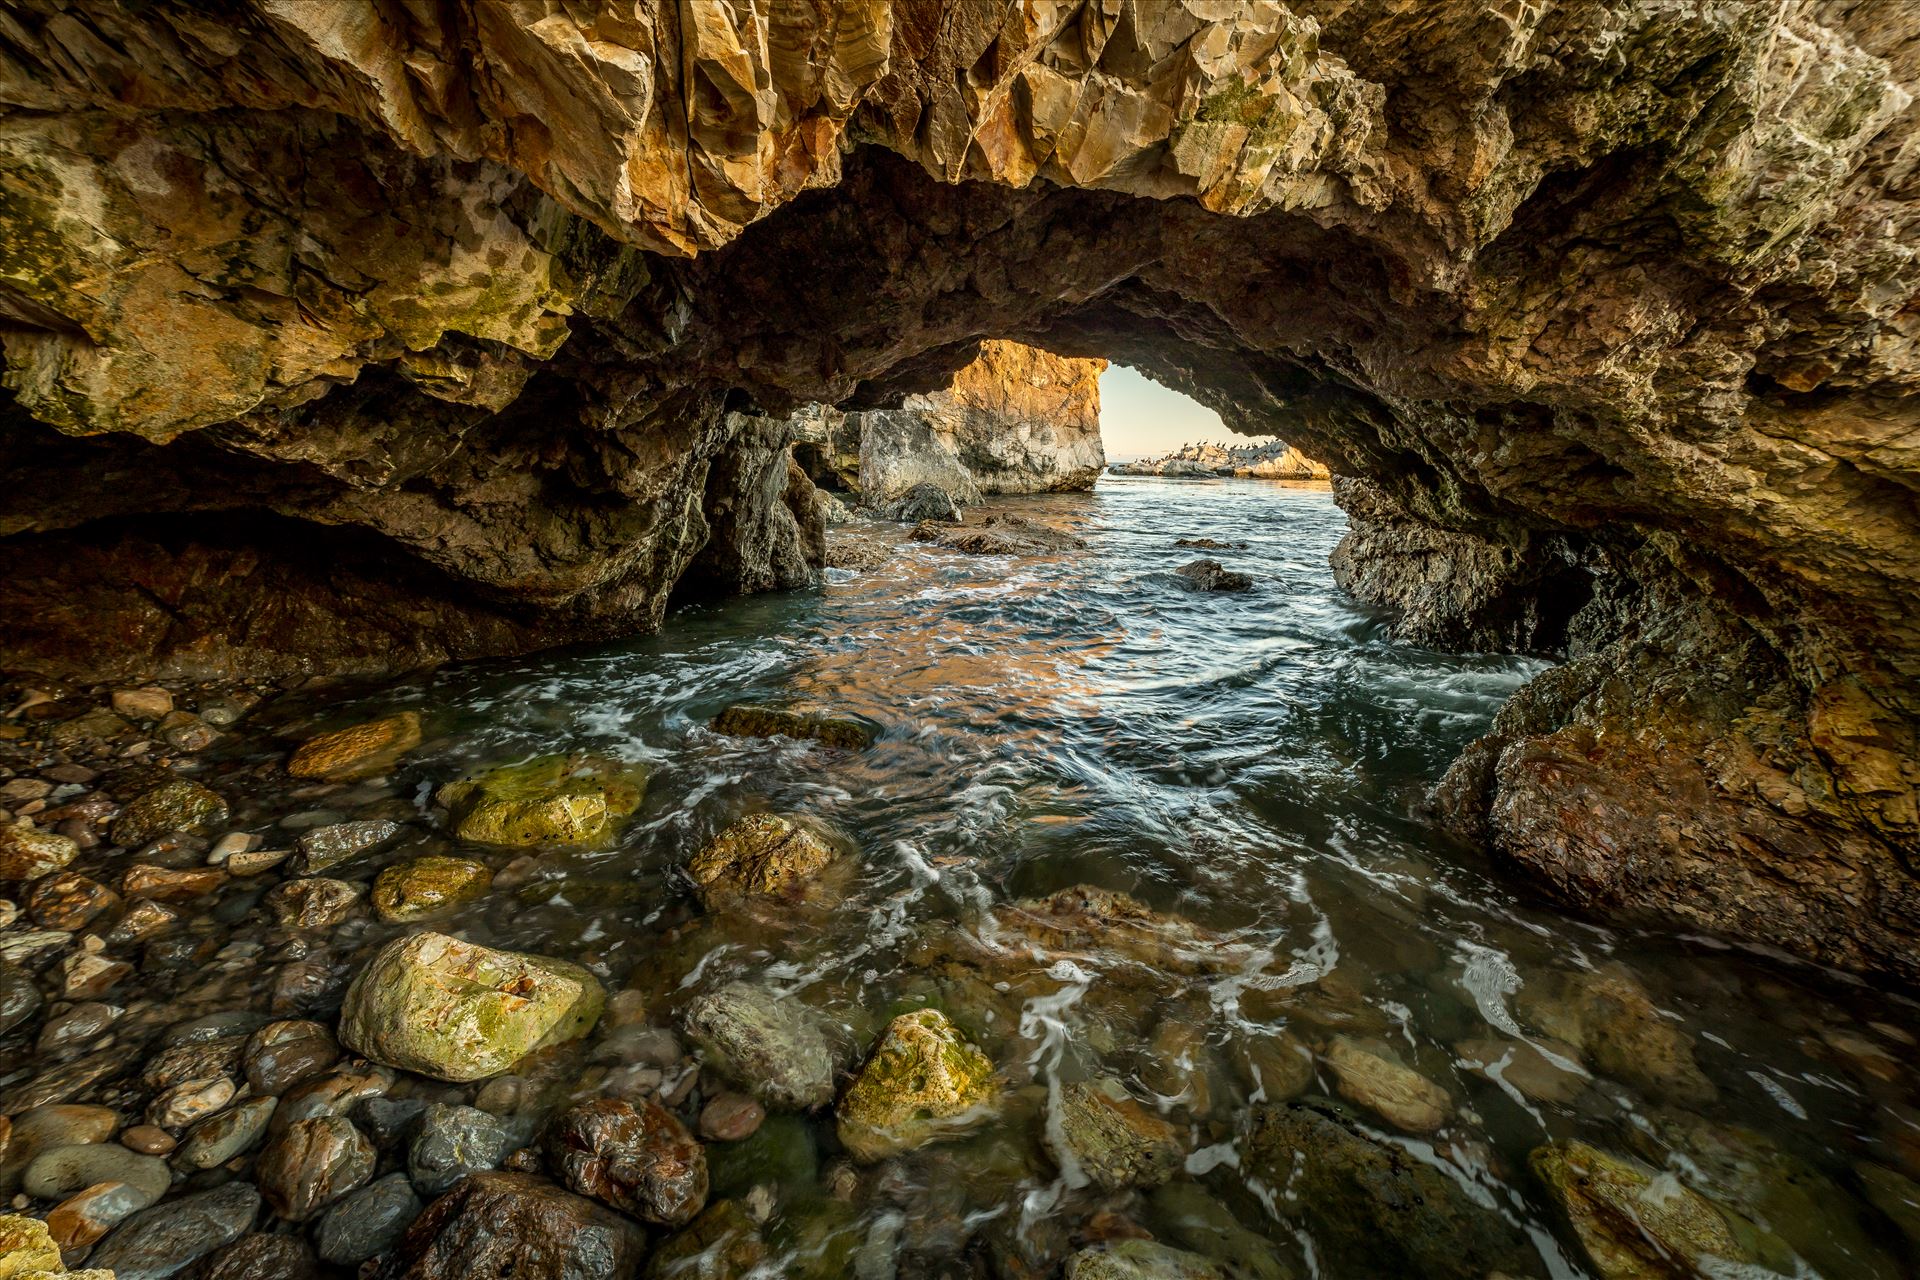 Sea Caves at Shell Beach - A sea cave on Shell Beach, California. by Scott Smith Photos